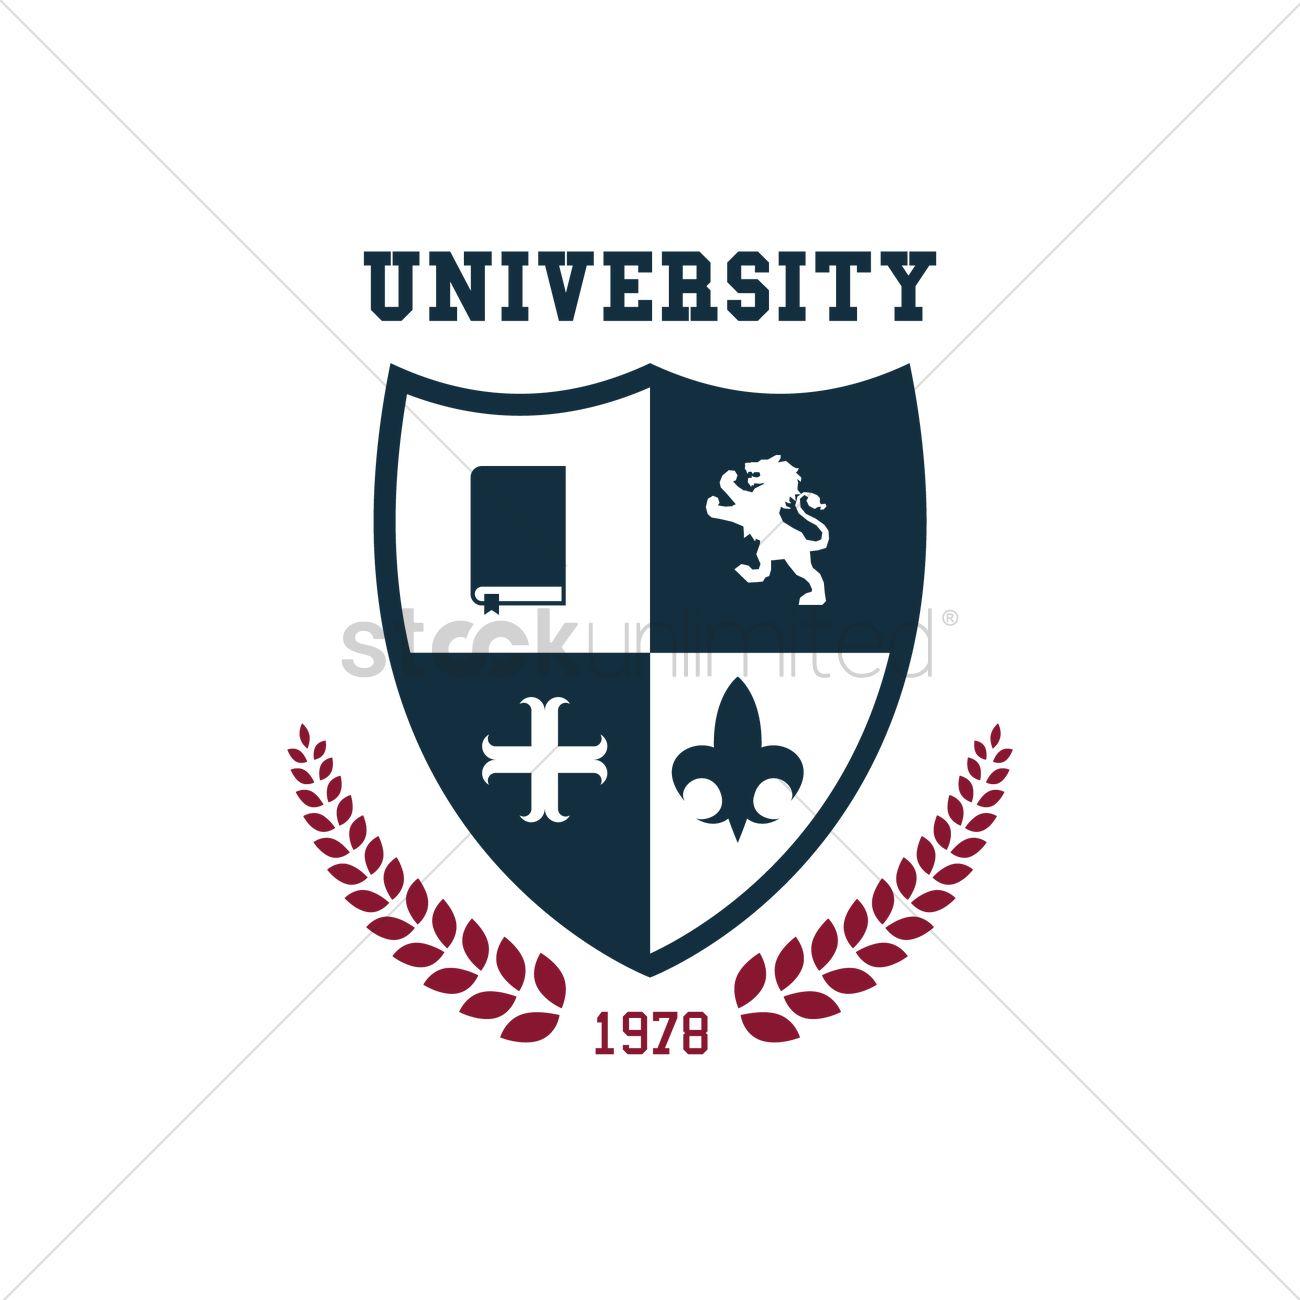 University Shield Logo - University logo design Vector Image